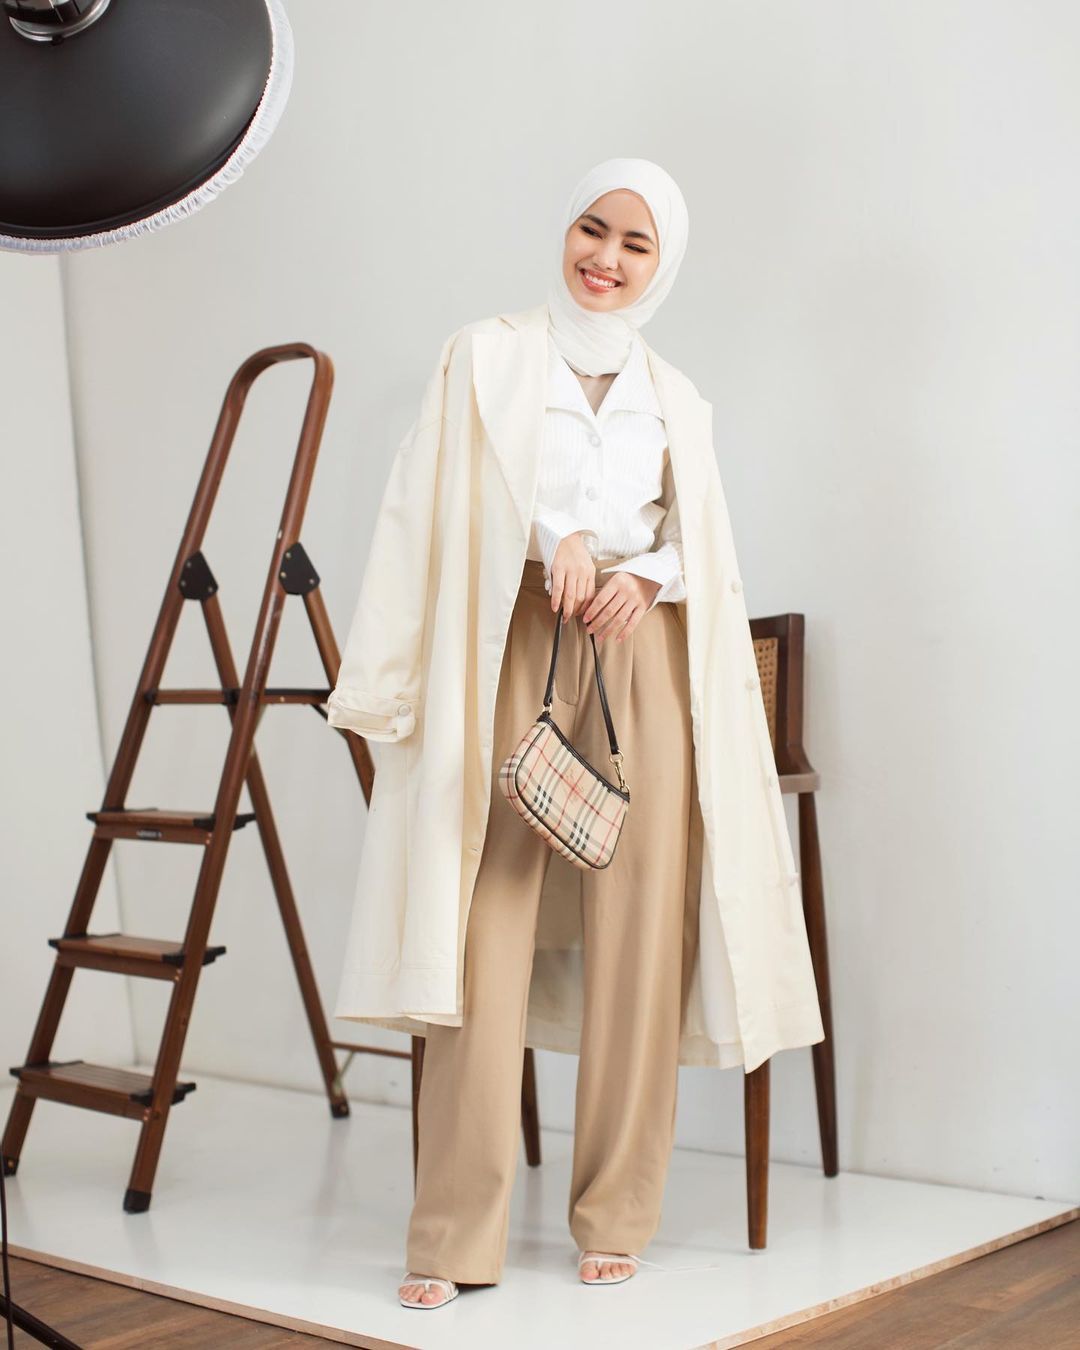 Inspirasi Padu-padan Hijab Warna Netral untuk Berbagai Occasion